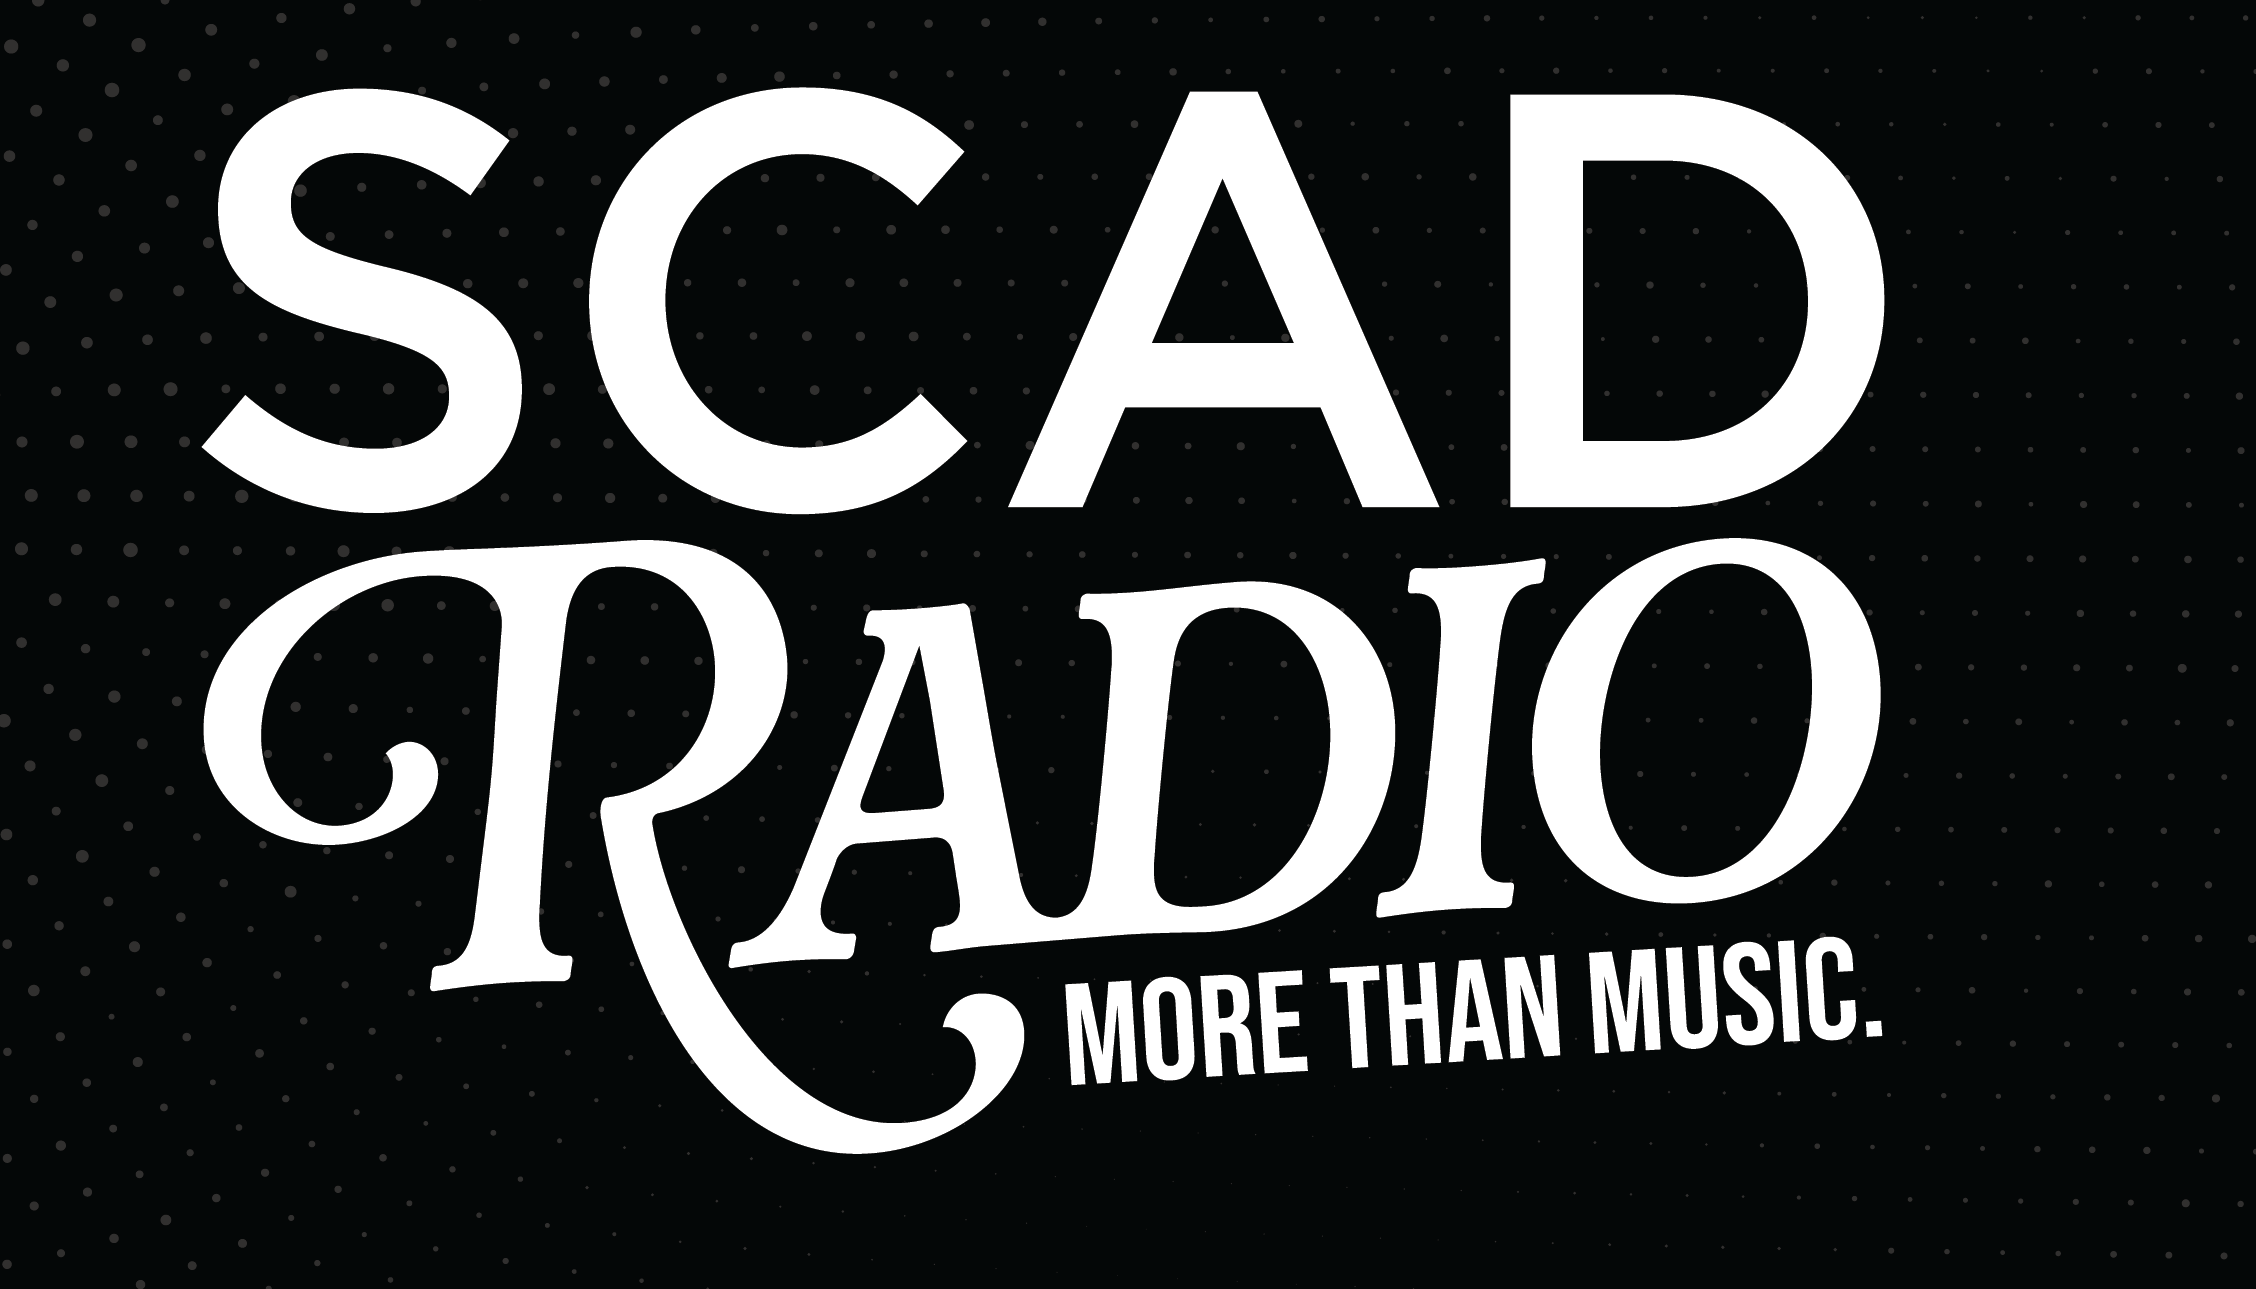 SCAD Radio